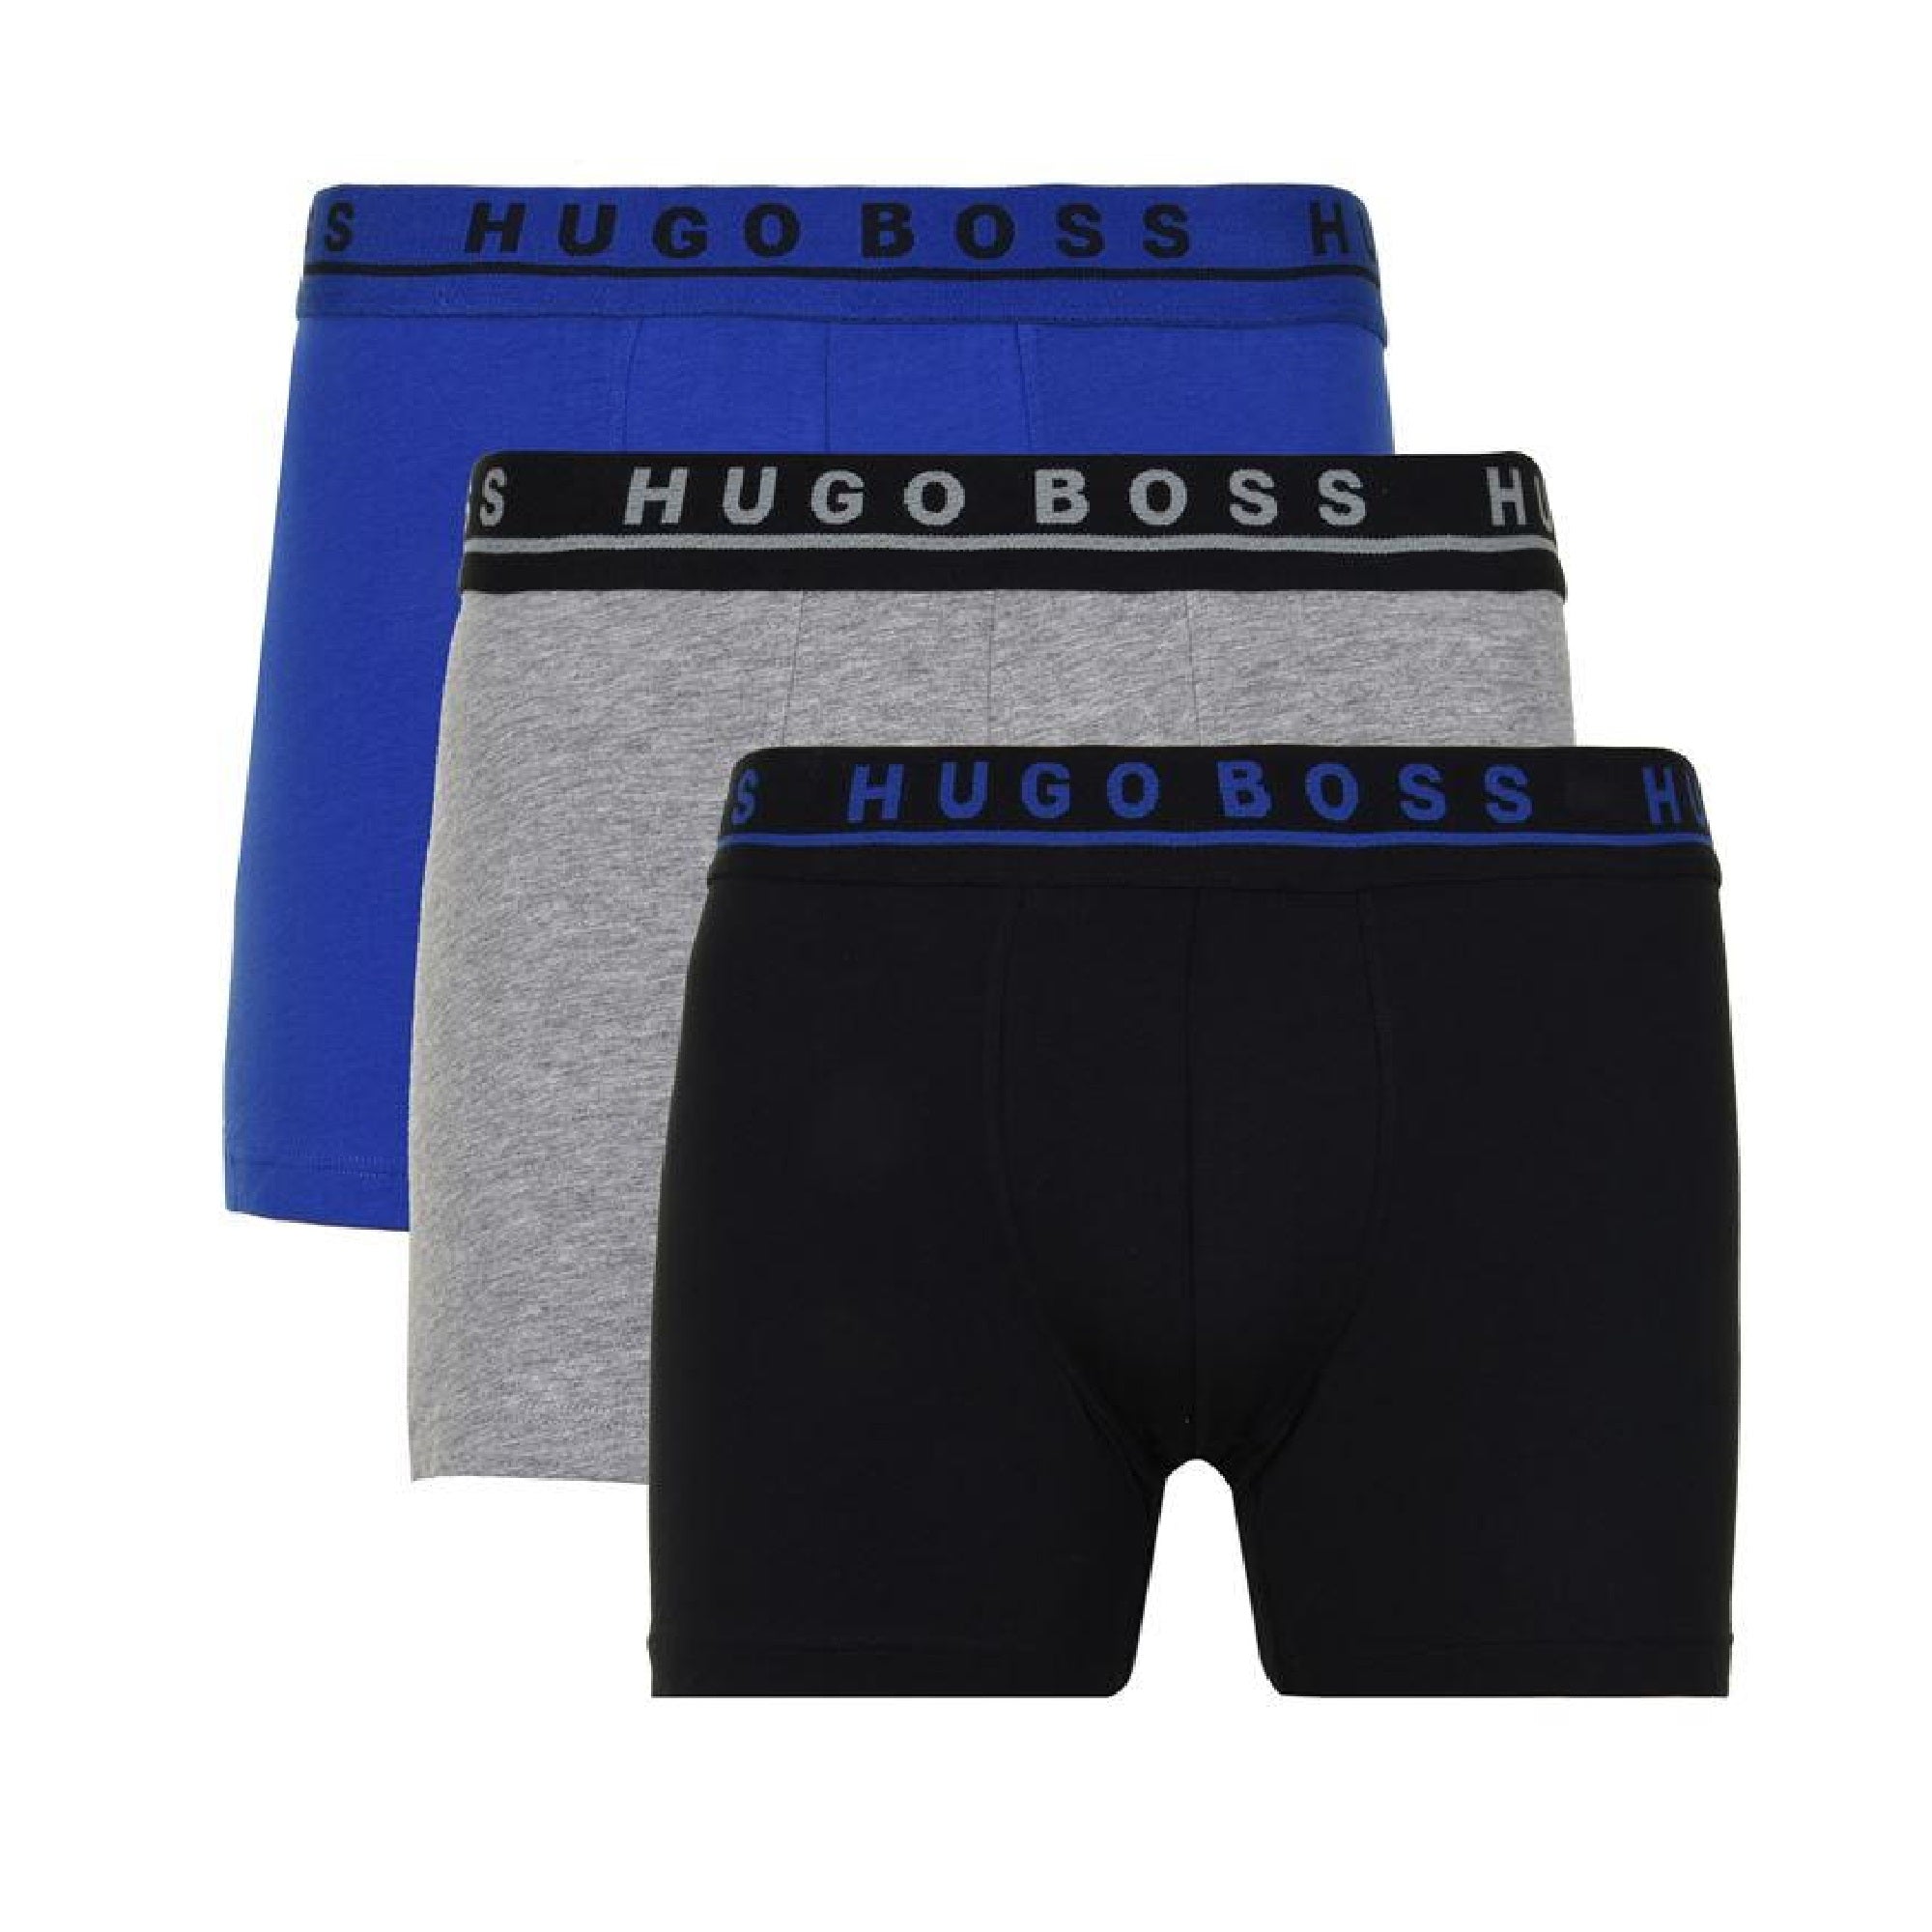 Hugo Boss Cotton Stretch Boxer Briefs 3-Pack